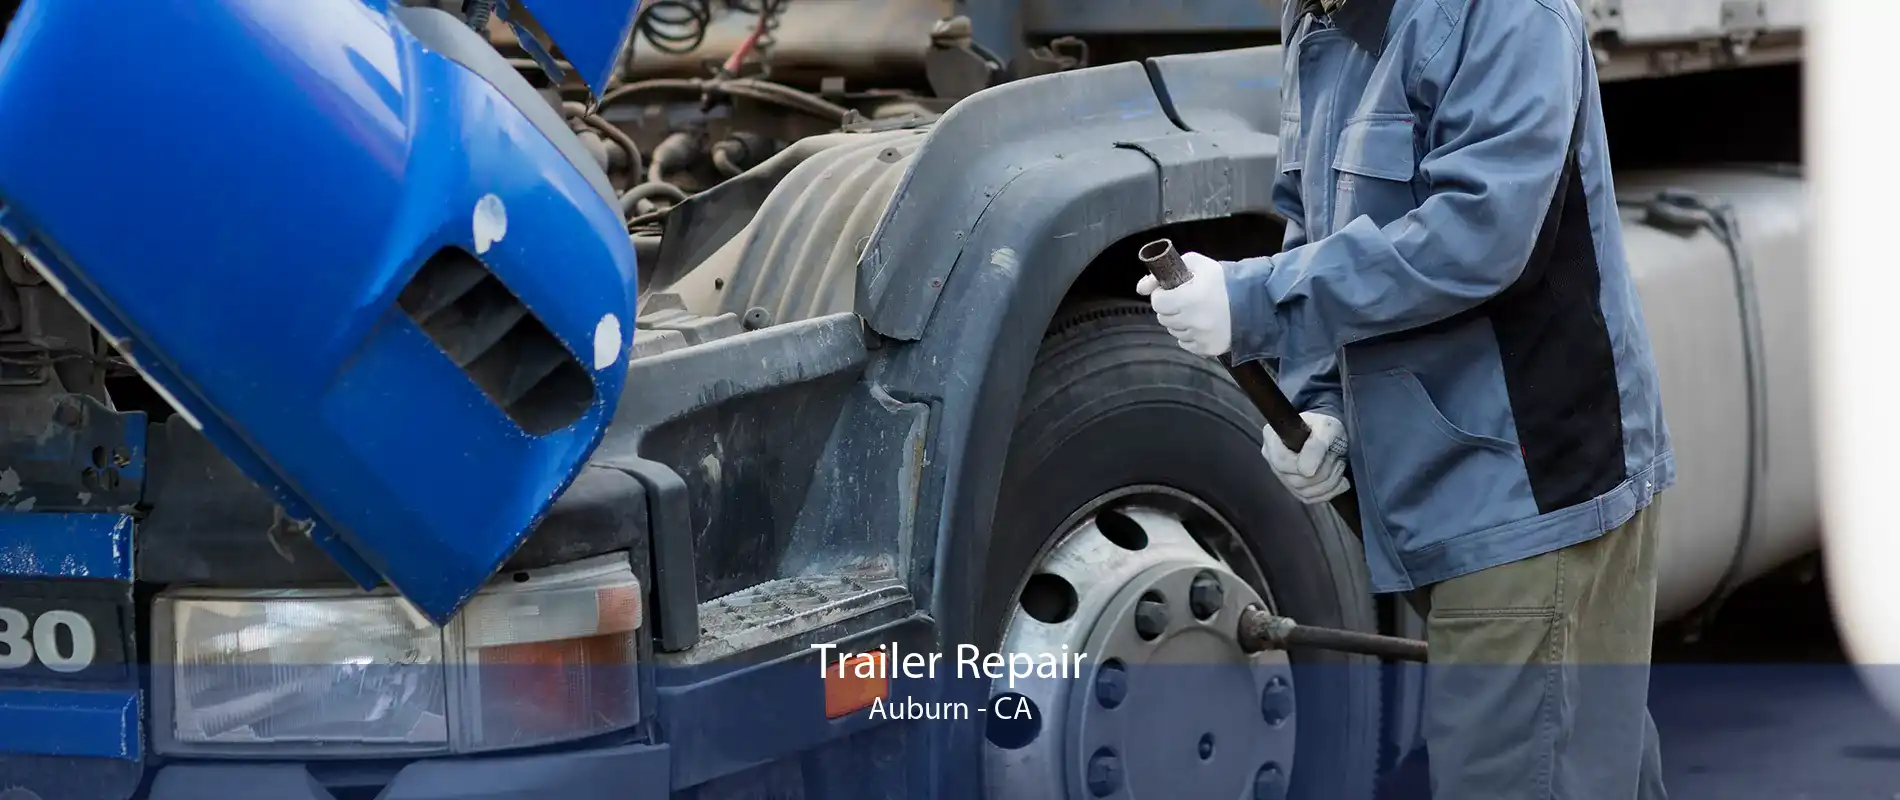 Trailer Repair Auburn - CA